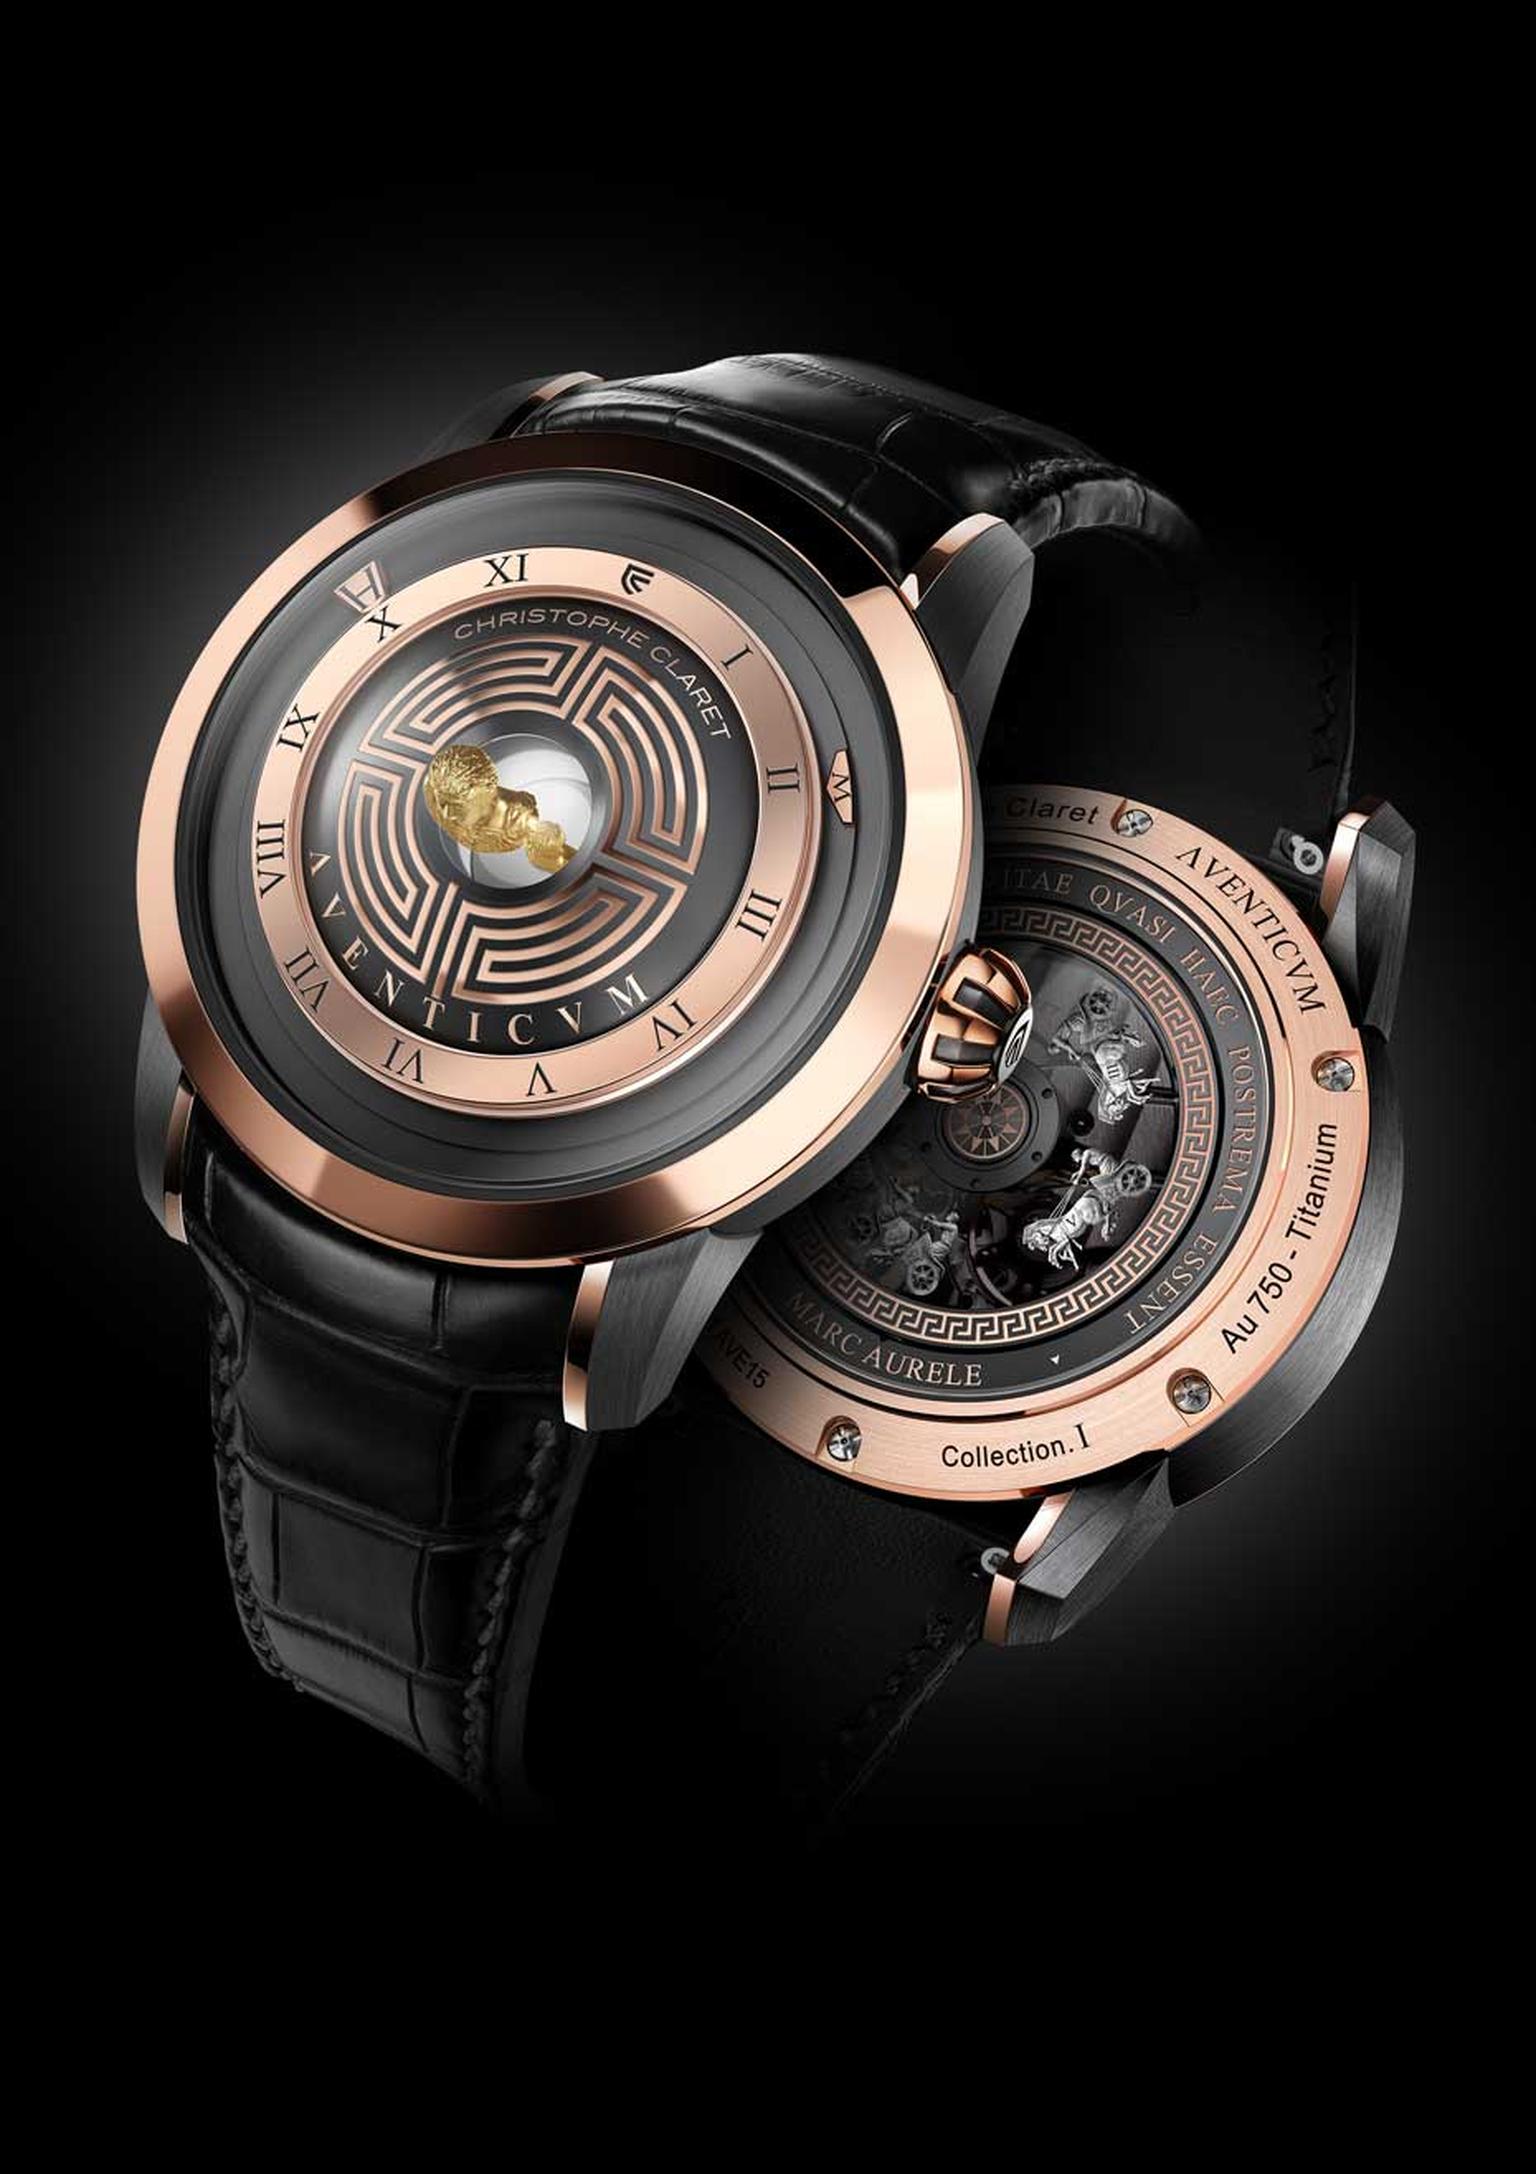 Часы романса. Christophe Claret часы. Christophe Claret watch. Часы Emperor. Marc Aurelius часы.